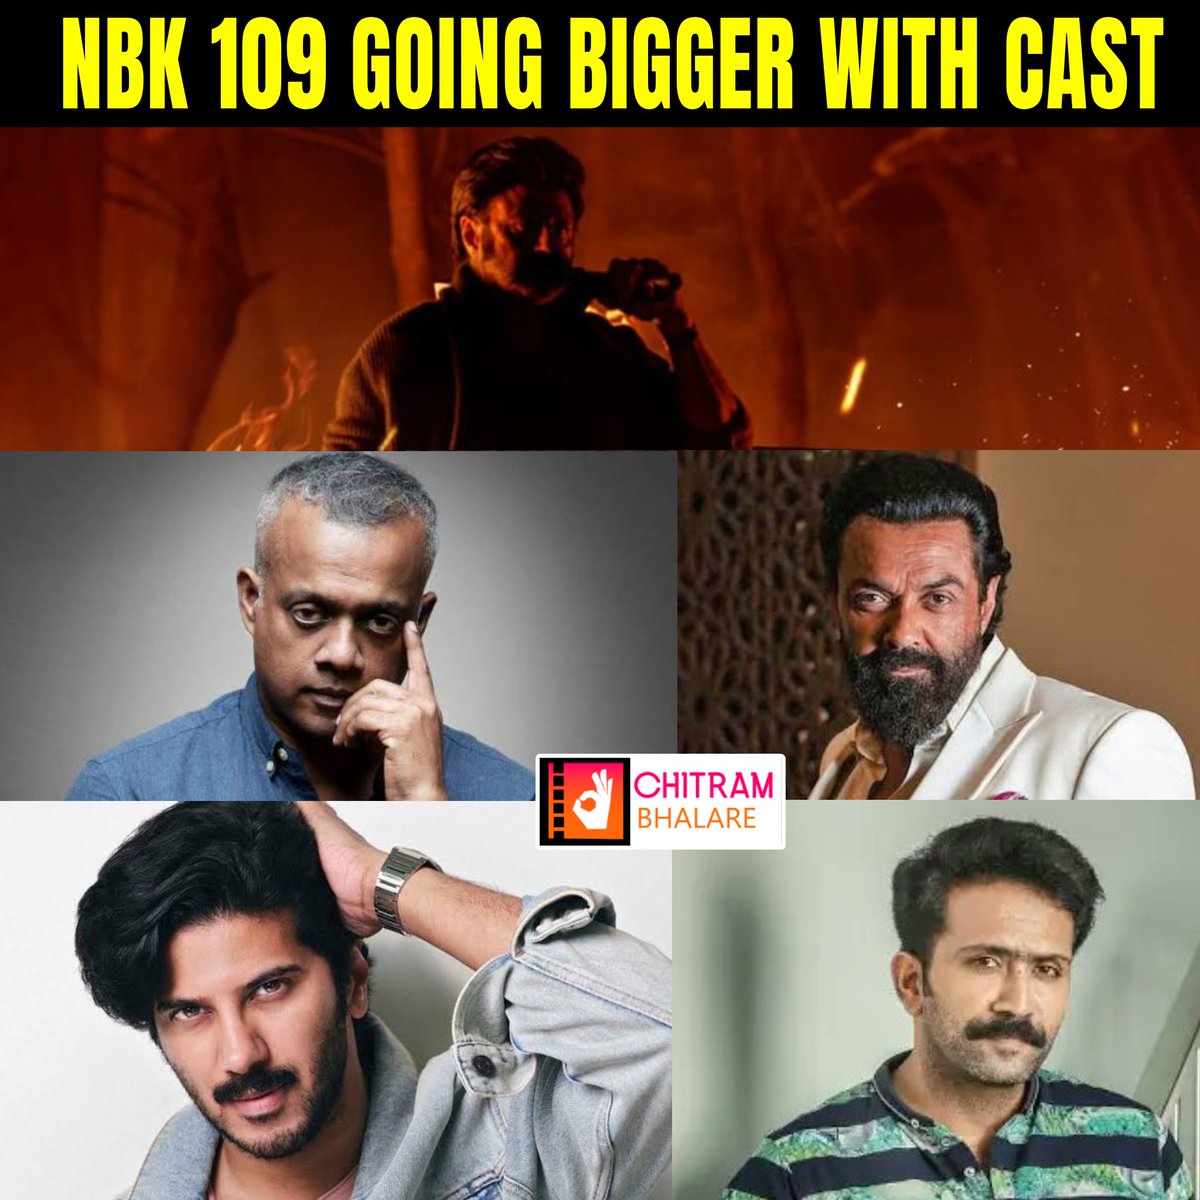 #NBK109 Cast as of now and its going very big 

#NandamuriBalakrishna 🔥🔥🔥

#DulquerSalmaan #ShineTomChacko #VasudevMenon #BobyDeol